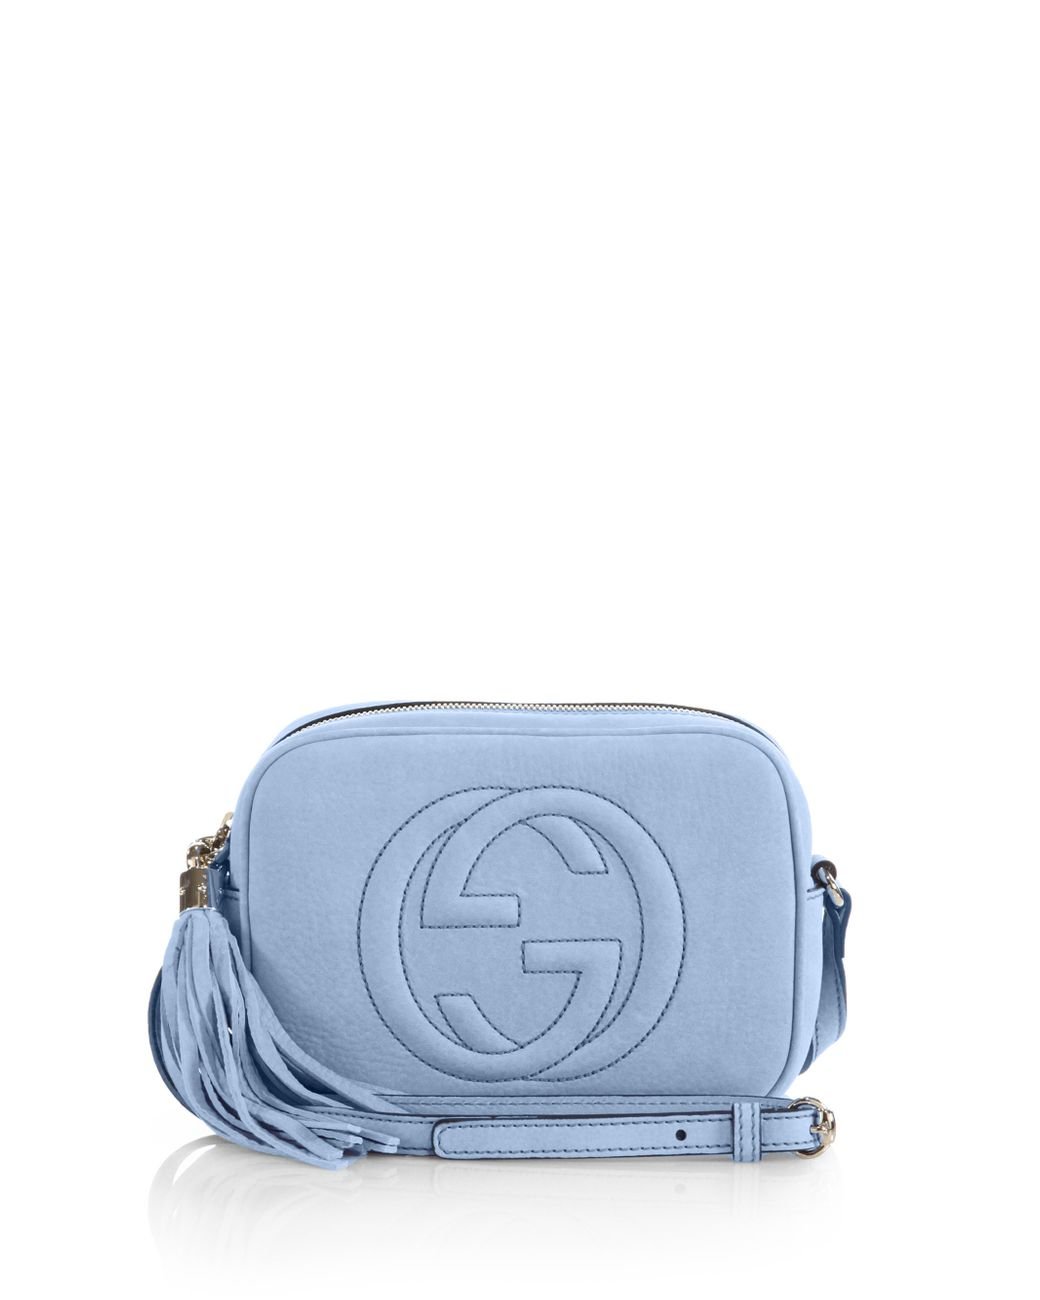 Gucci Fuchsia Leather Small Soho Disco Crossbody Bag Gucci | TLC